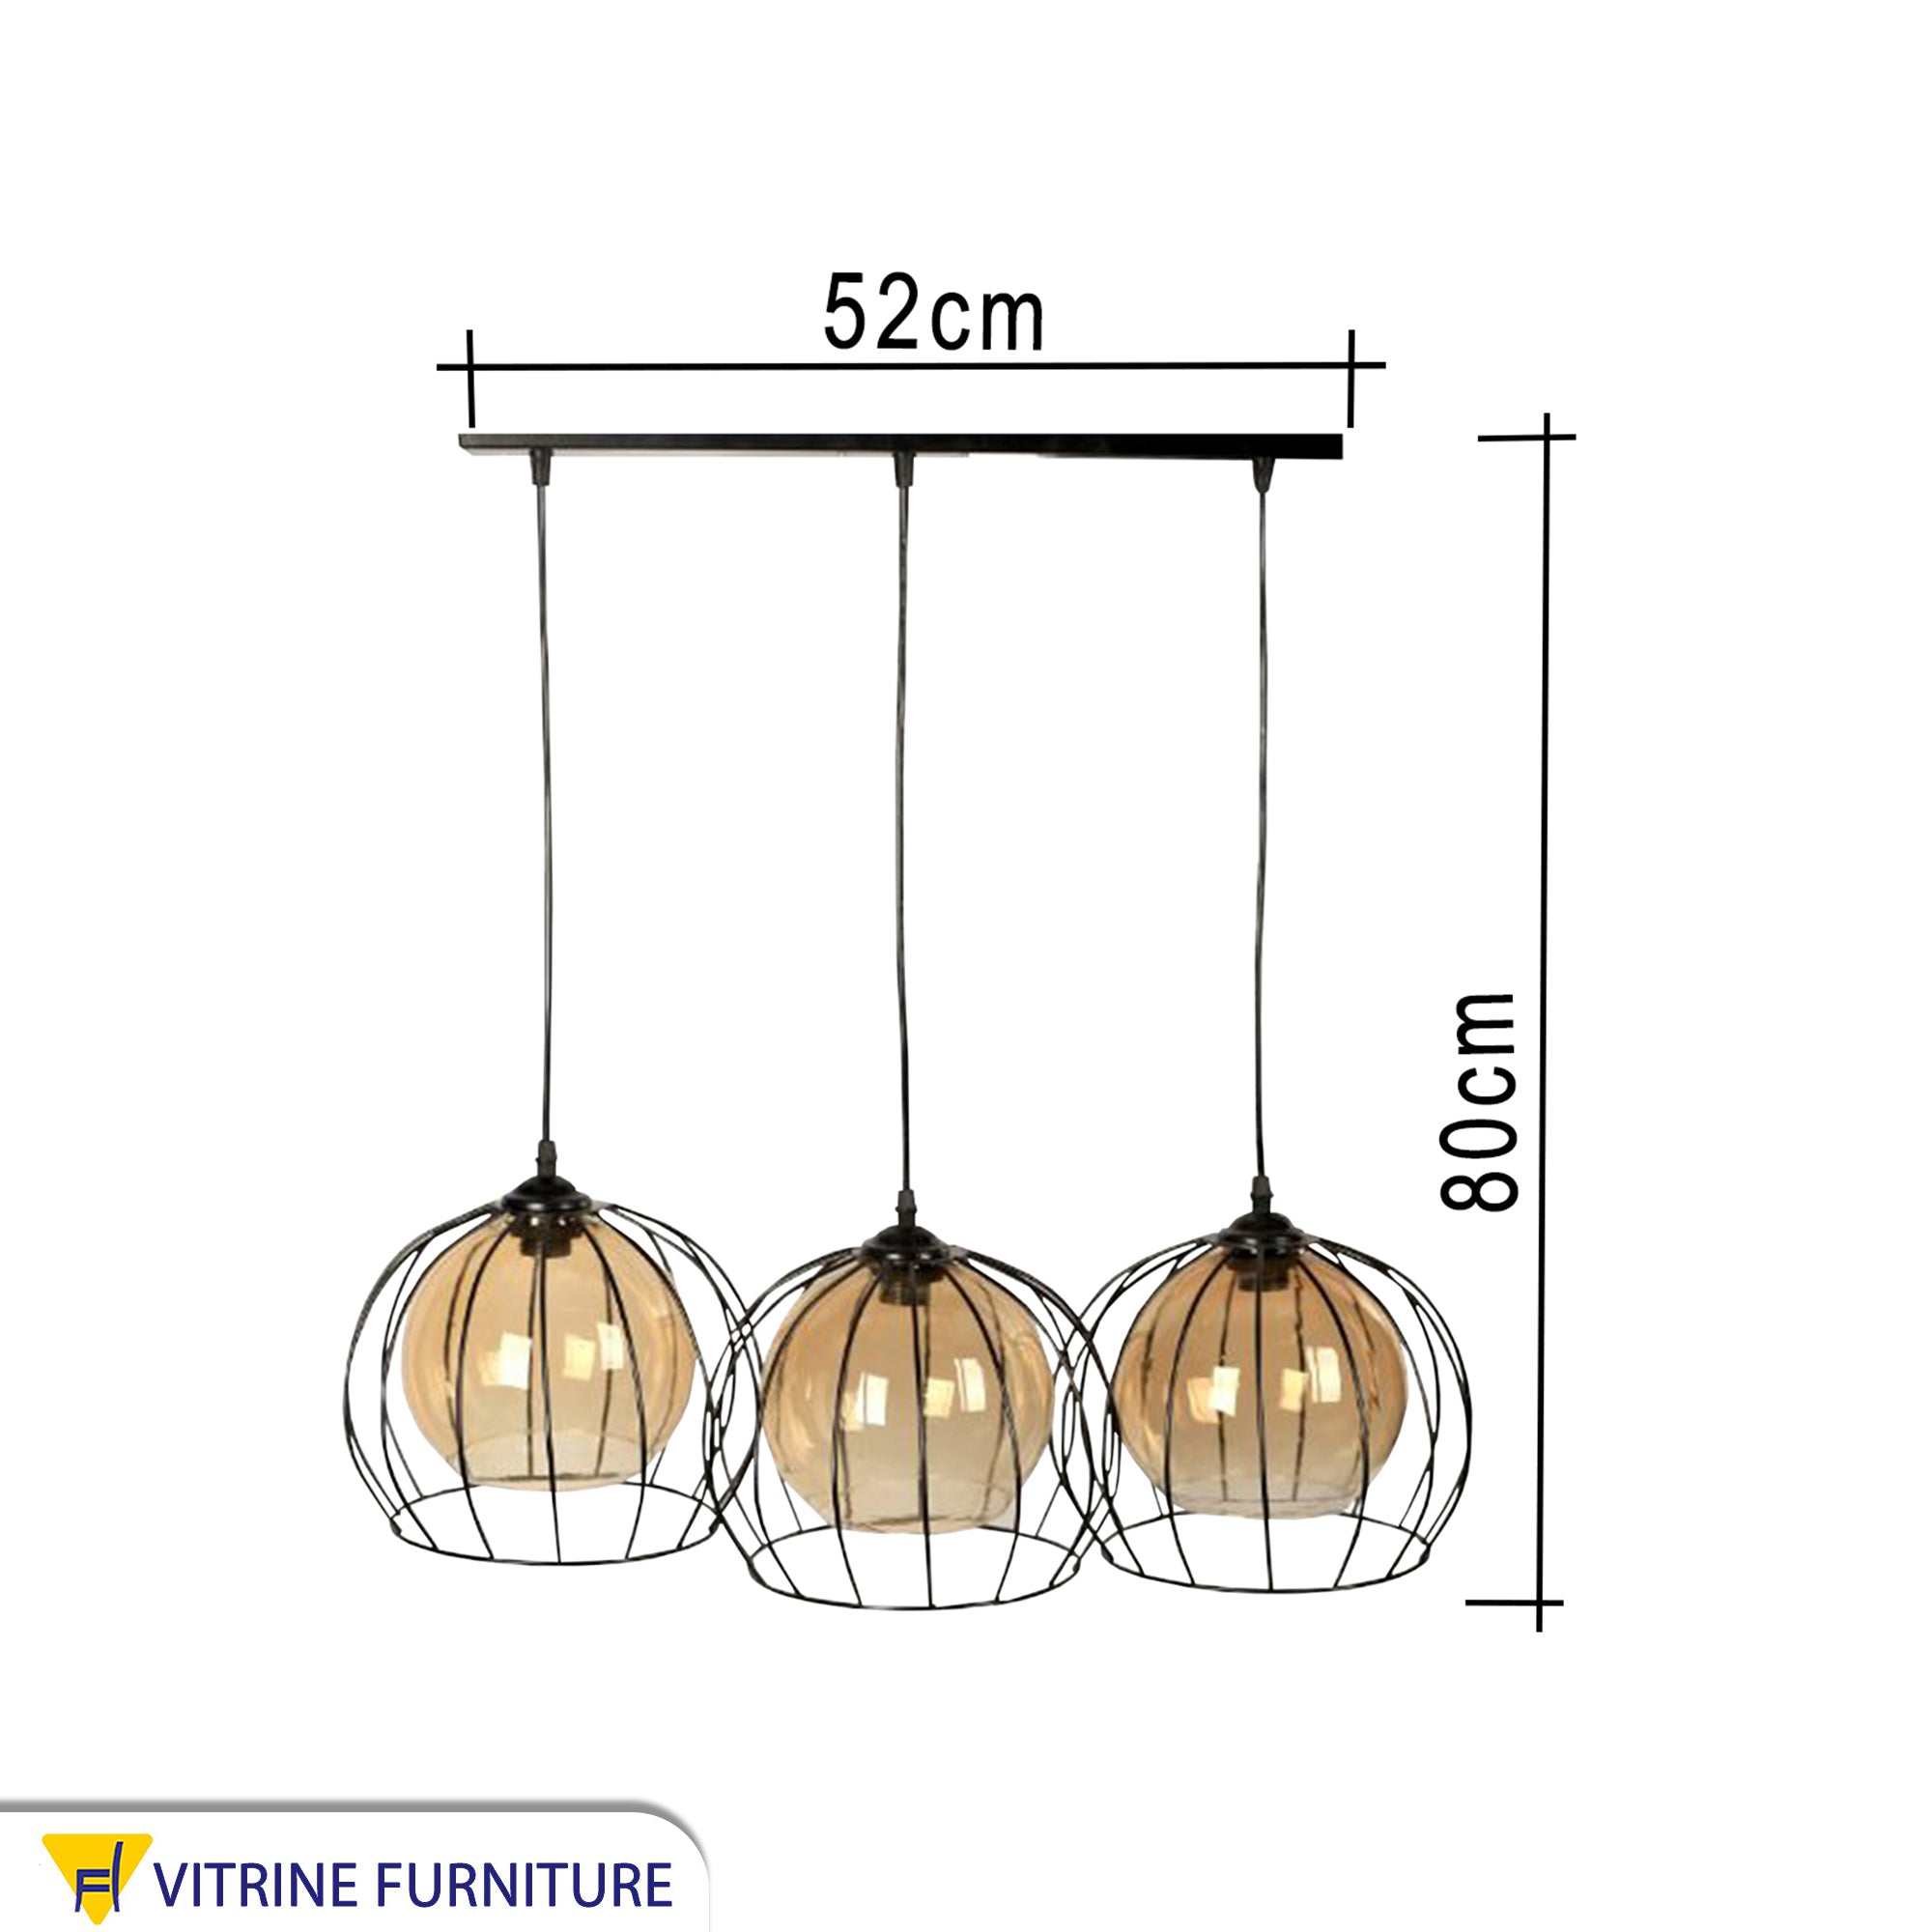 Lighting unit with 3 spherical pendants